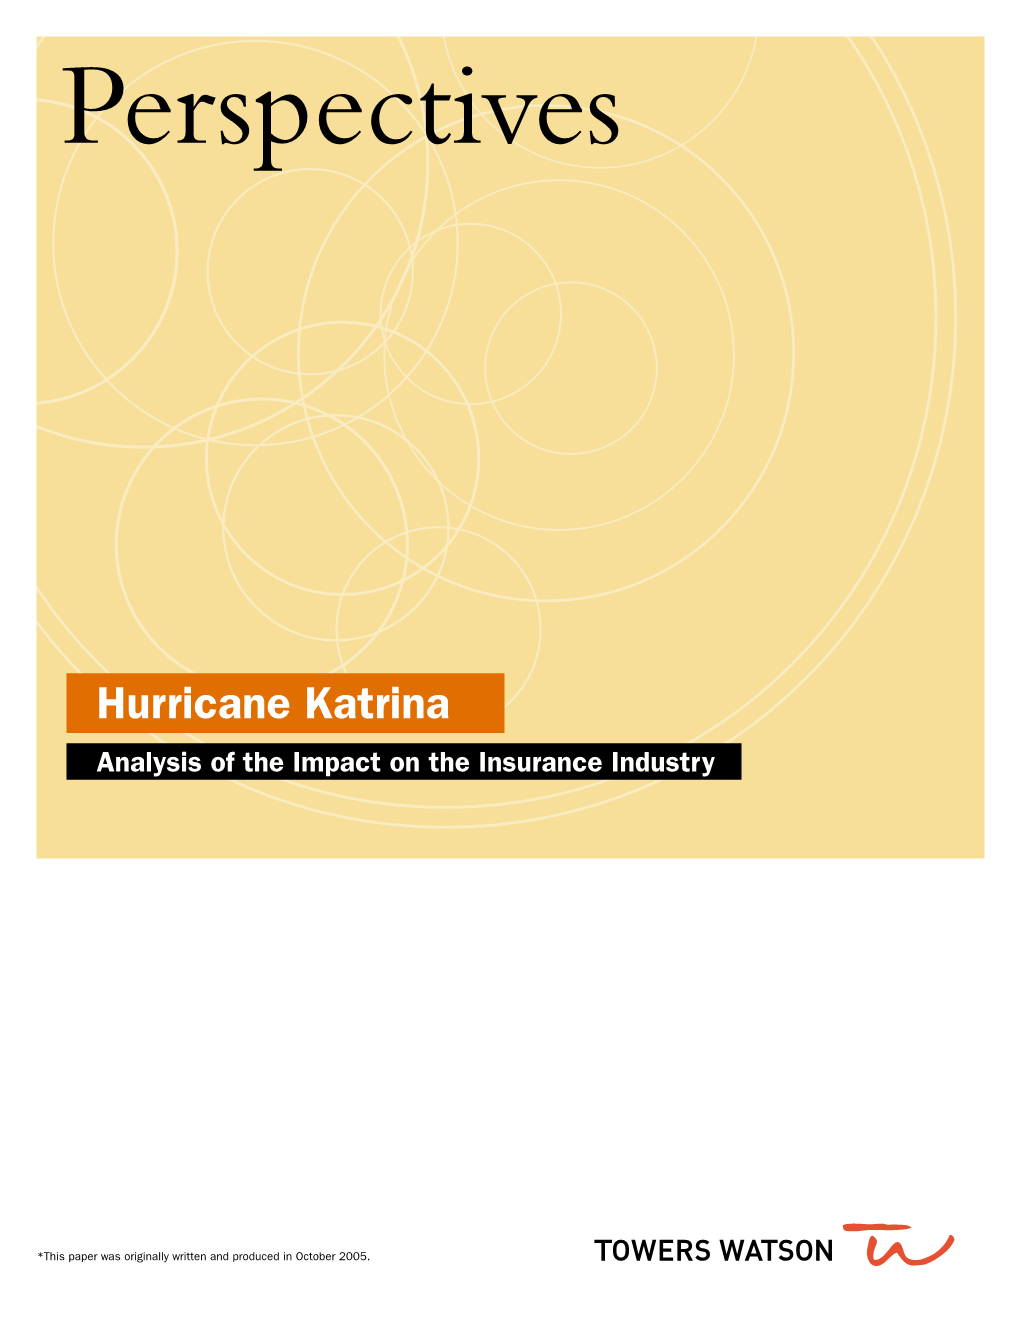 Impact of Hurrican Katrina on the Insurance Industry | Towers Watson